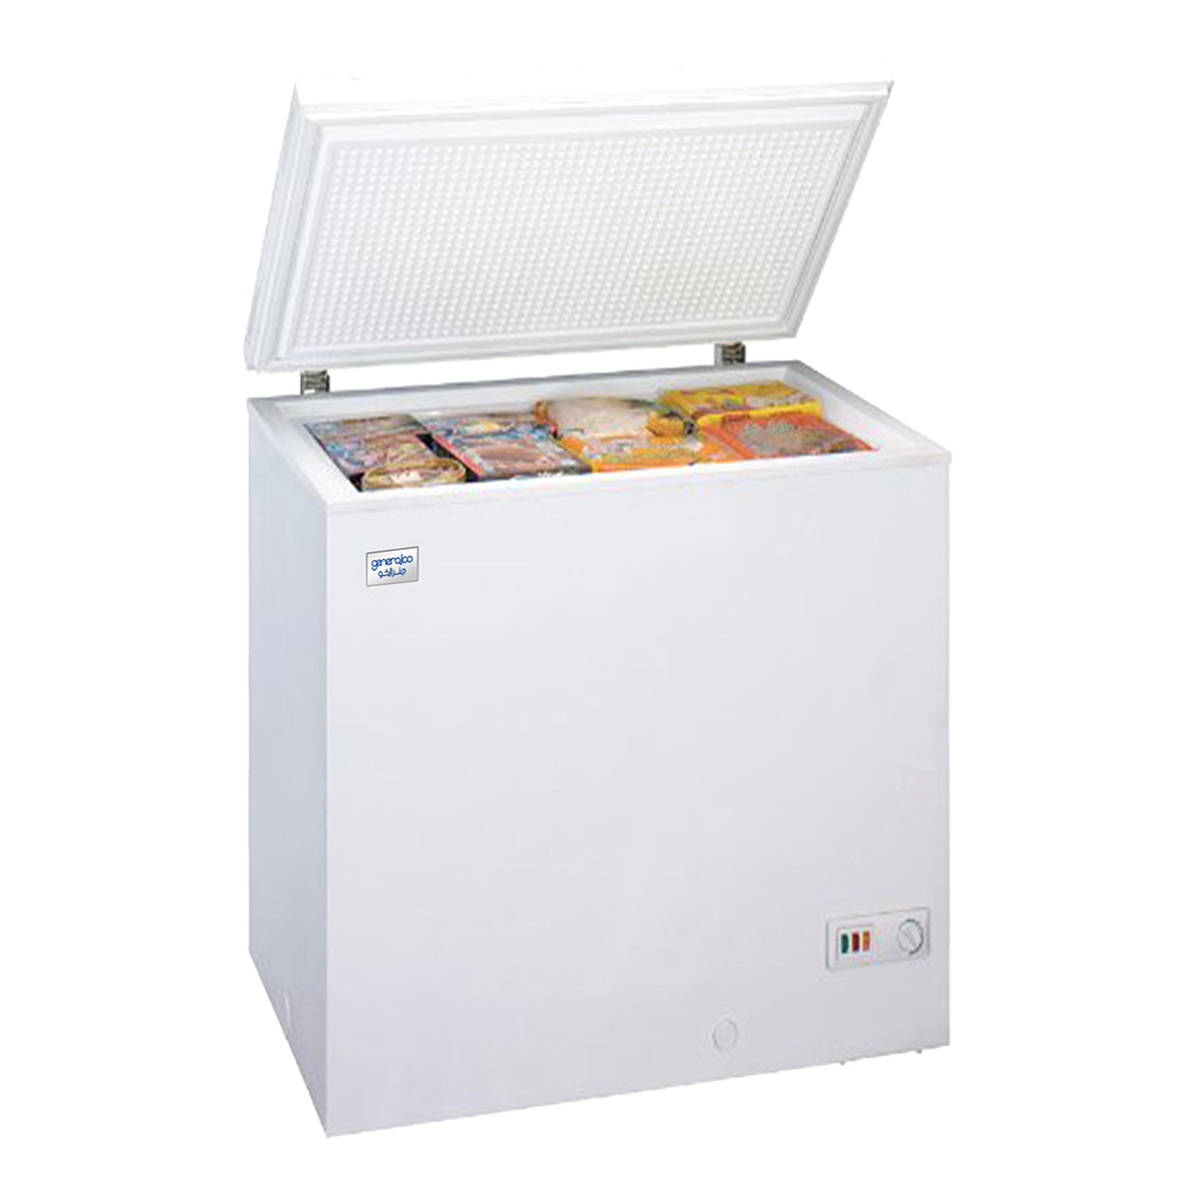 Generalco Chest Freezer, 175 L , White, GBD175